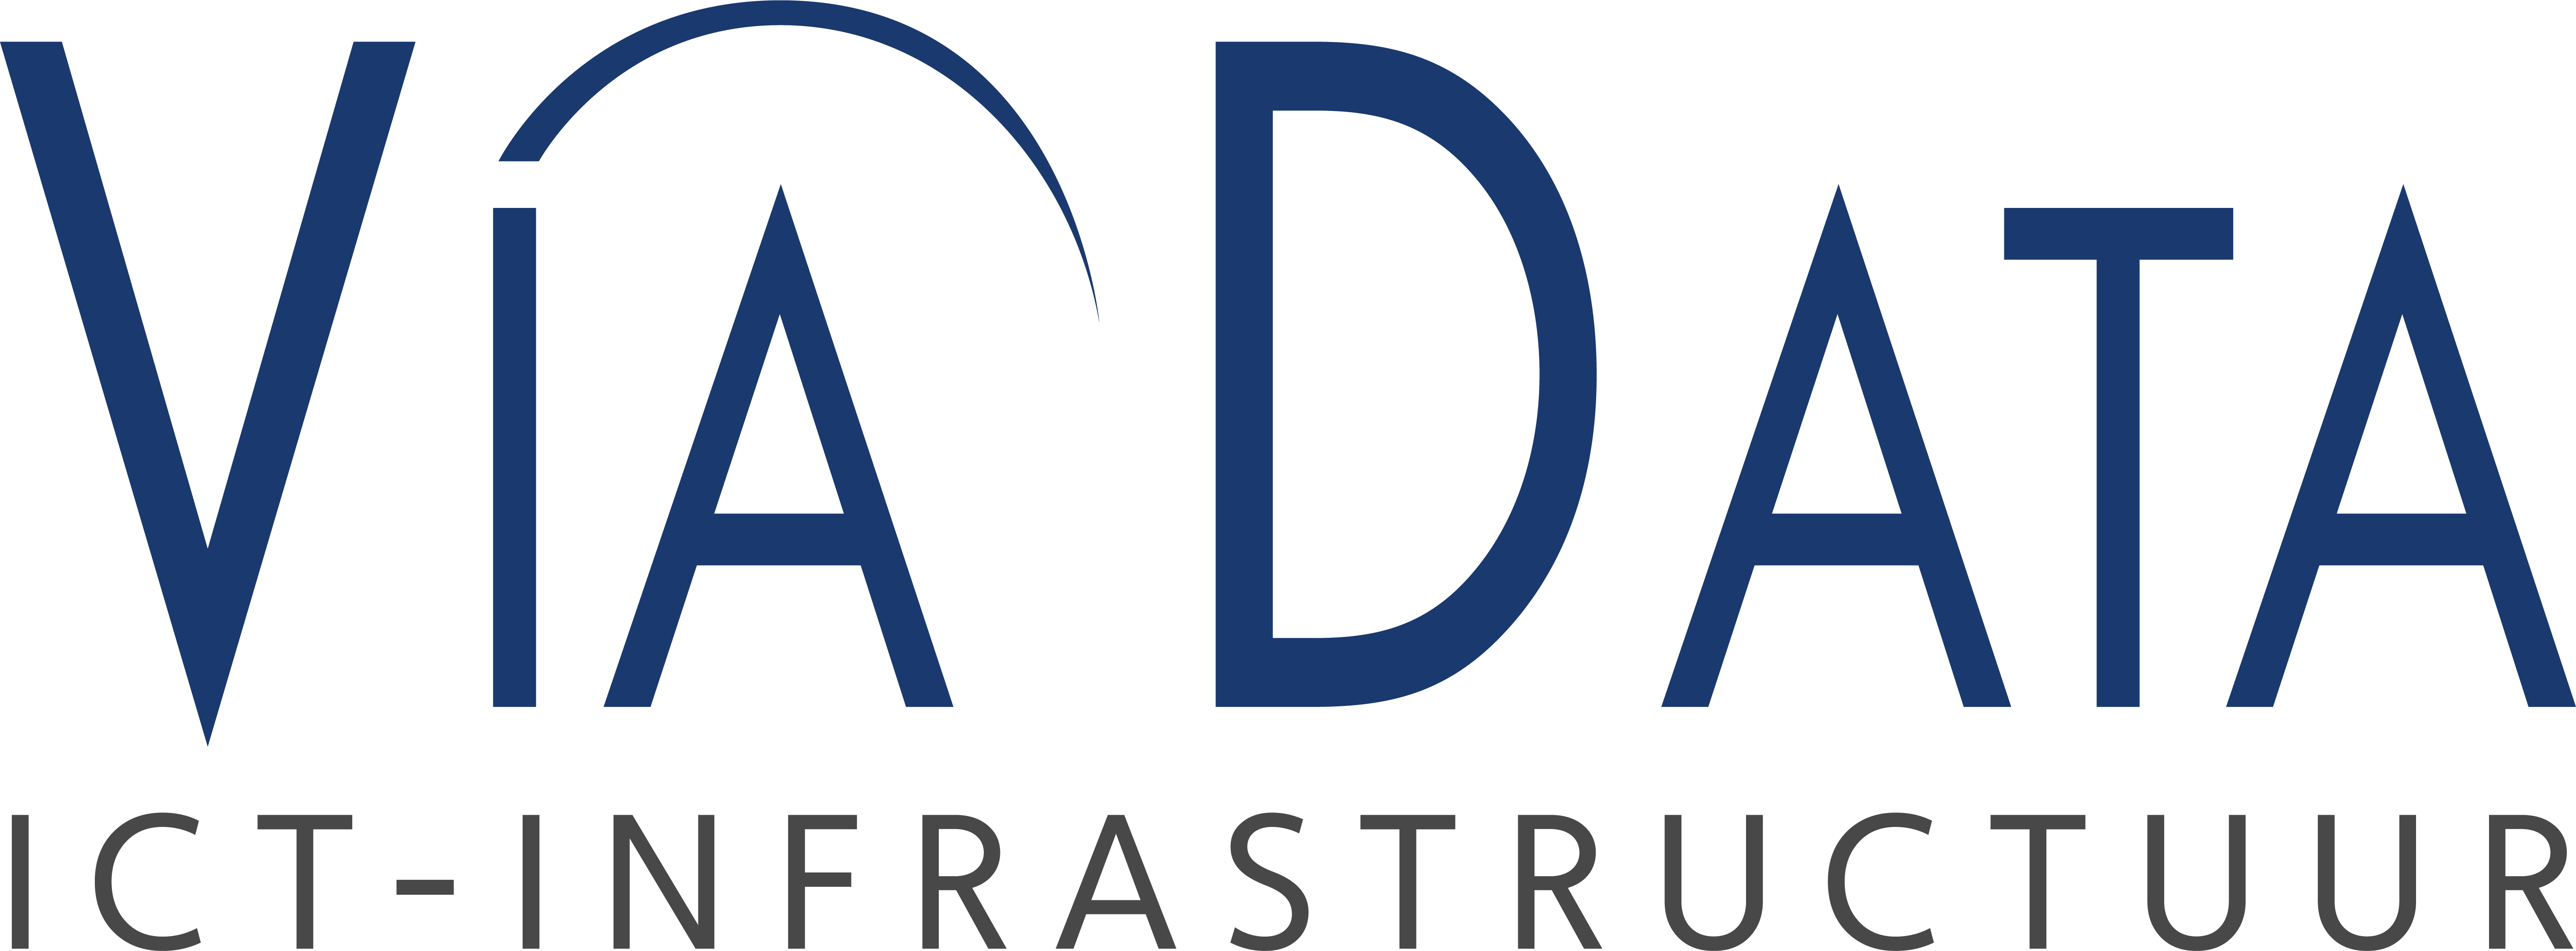 ViaData ICT Infrastructuur logo